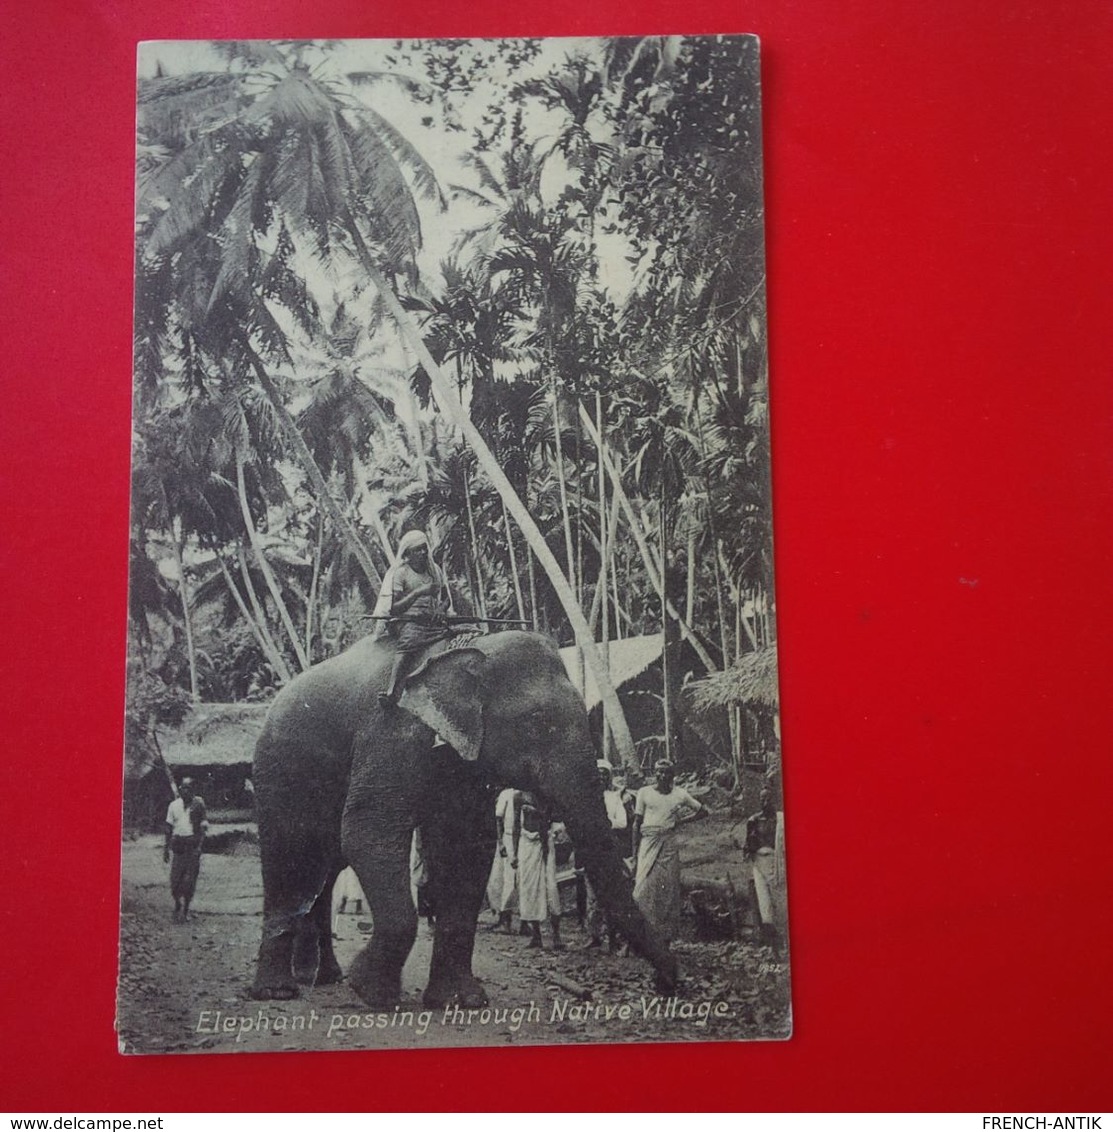 ELEPHANT PASSING THROUGH NATIVE VILLAGE - Sri Lanka (Ceylon)